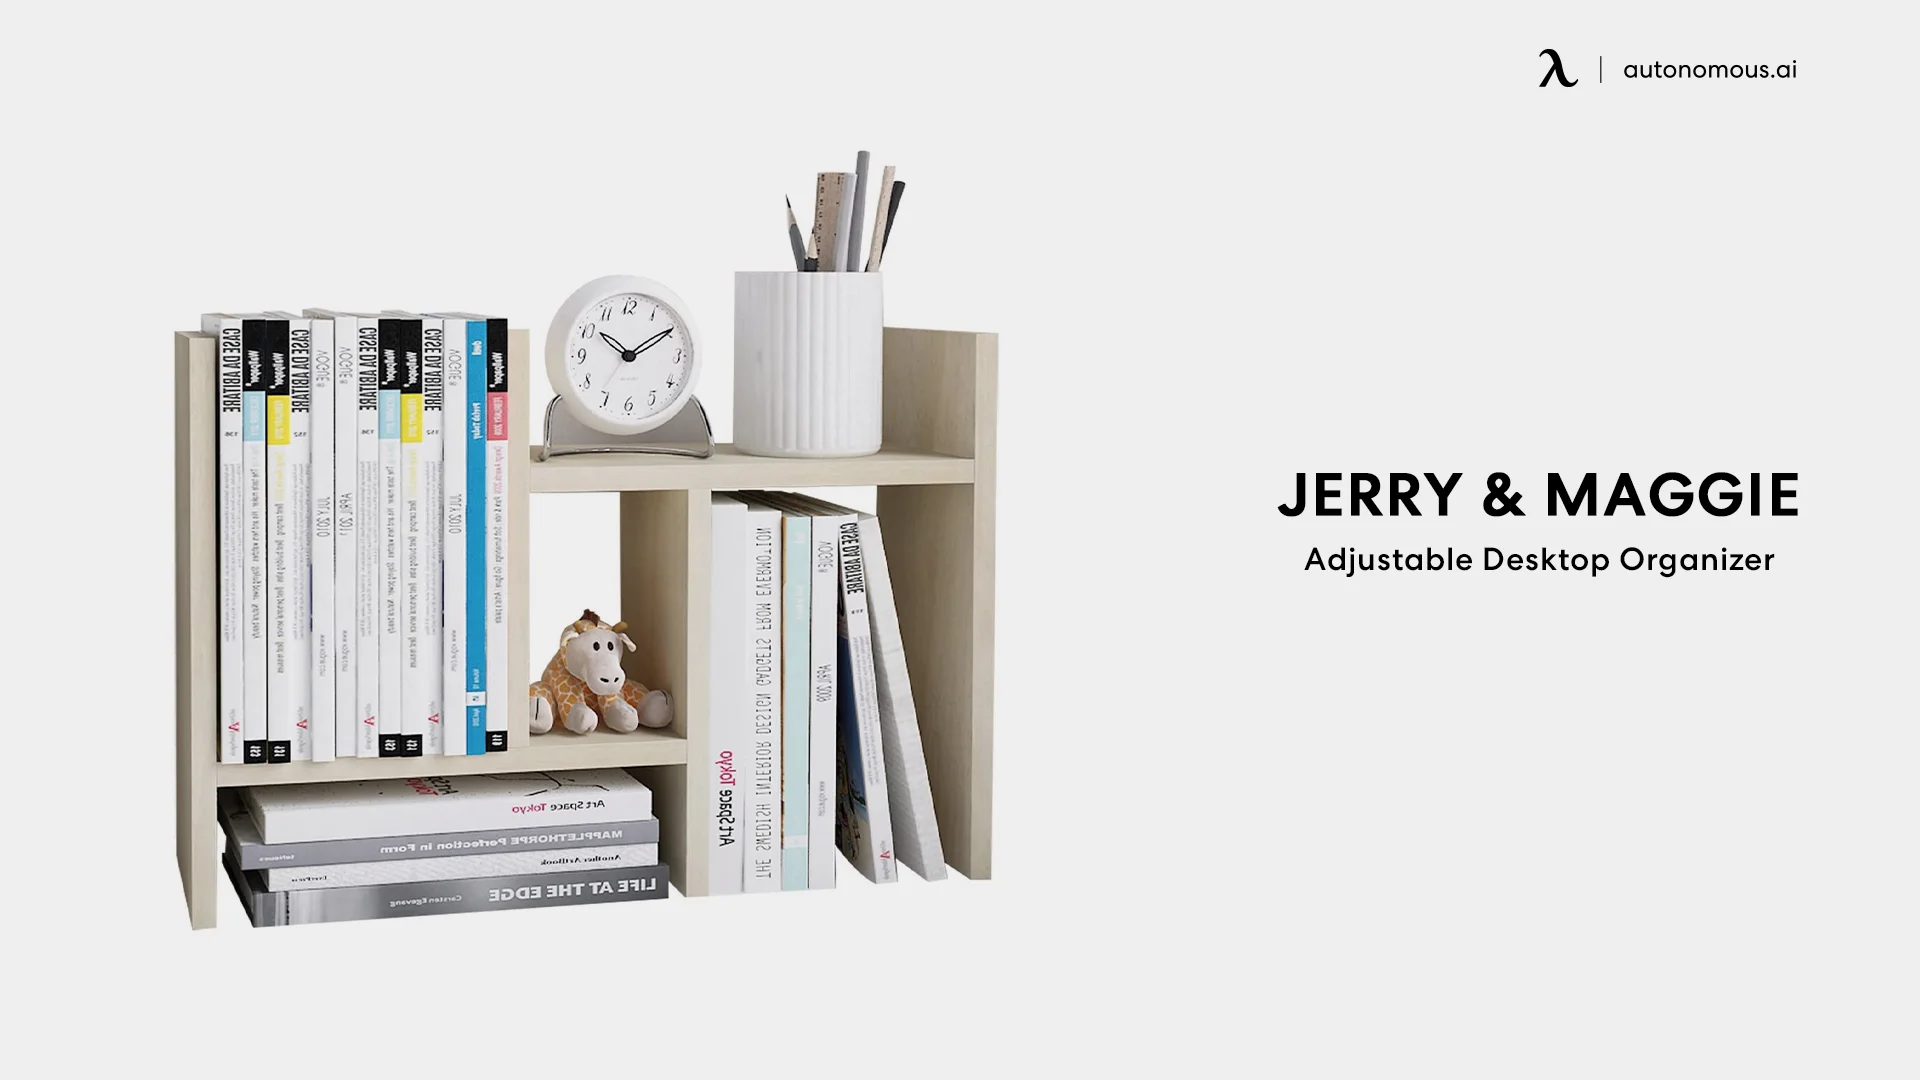 Jerry & Maggie Adjustable Desktop Organizer